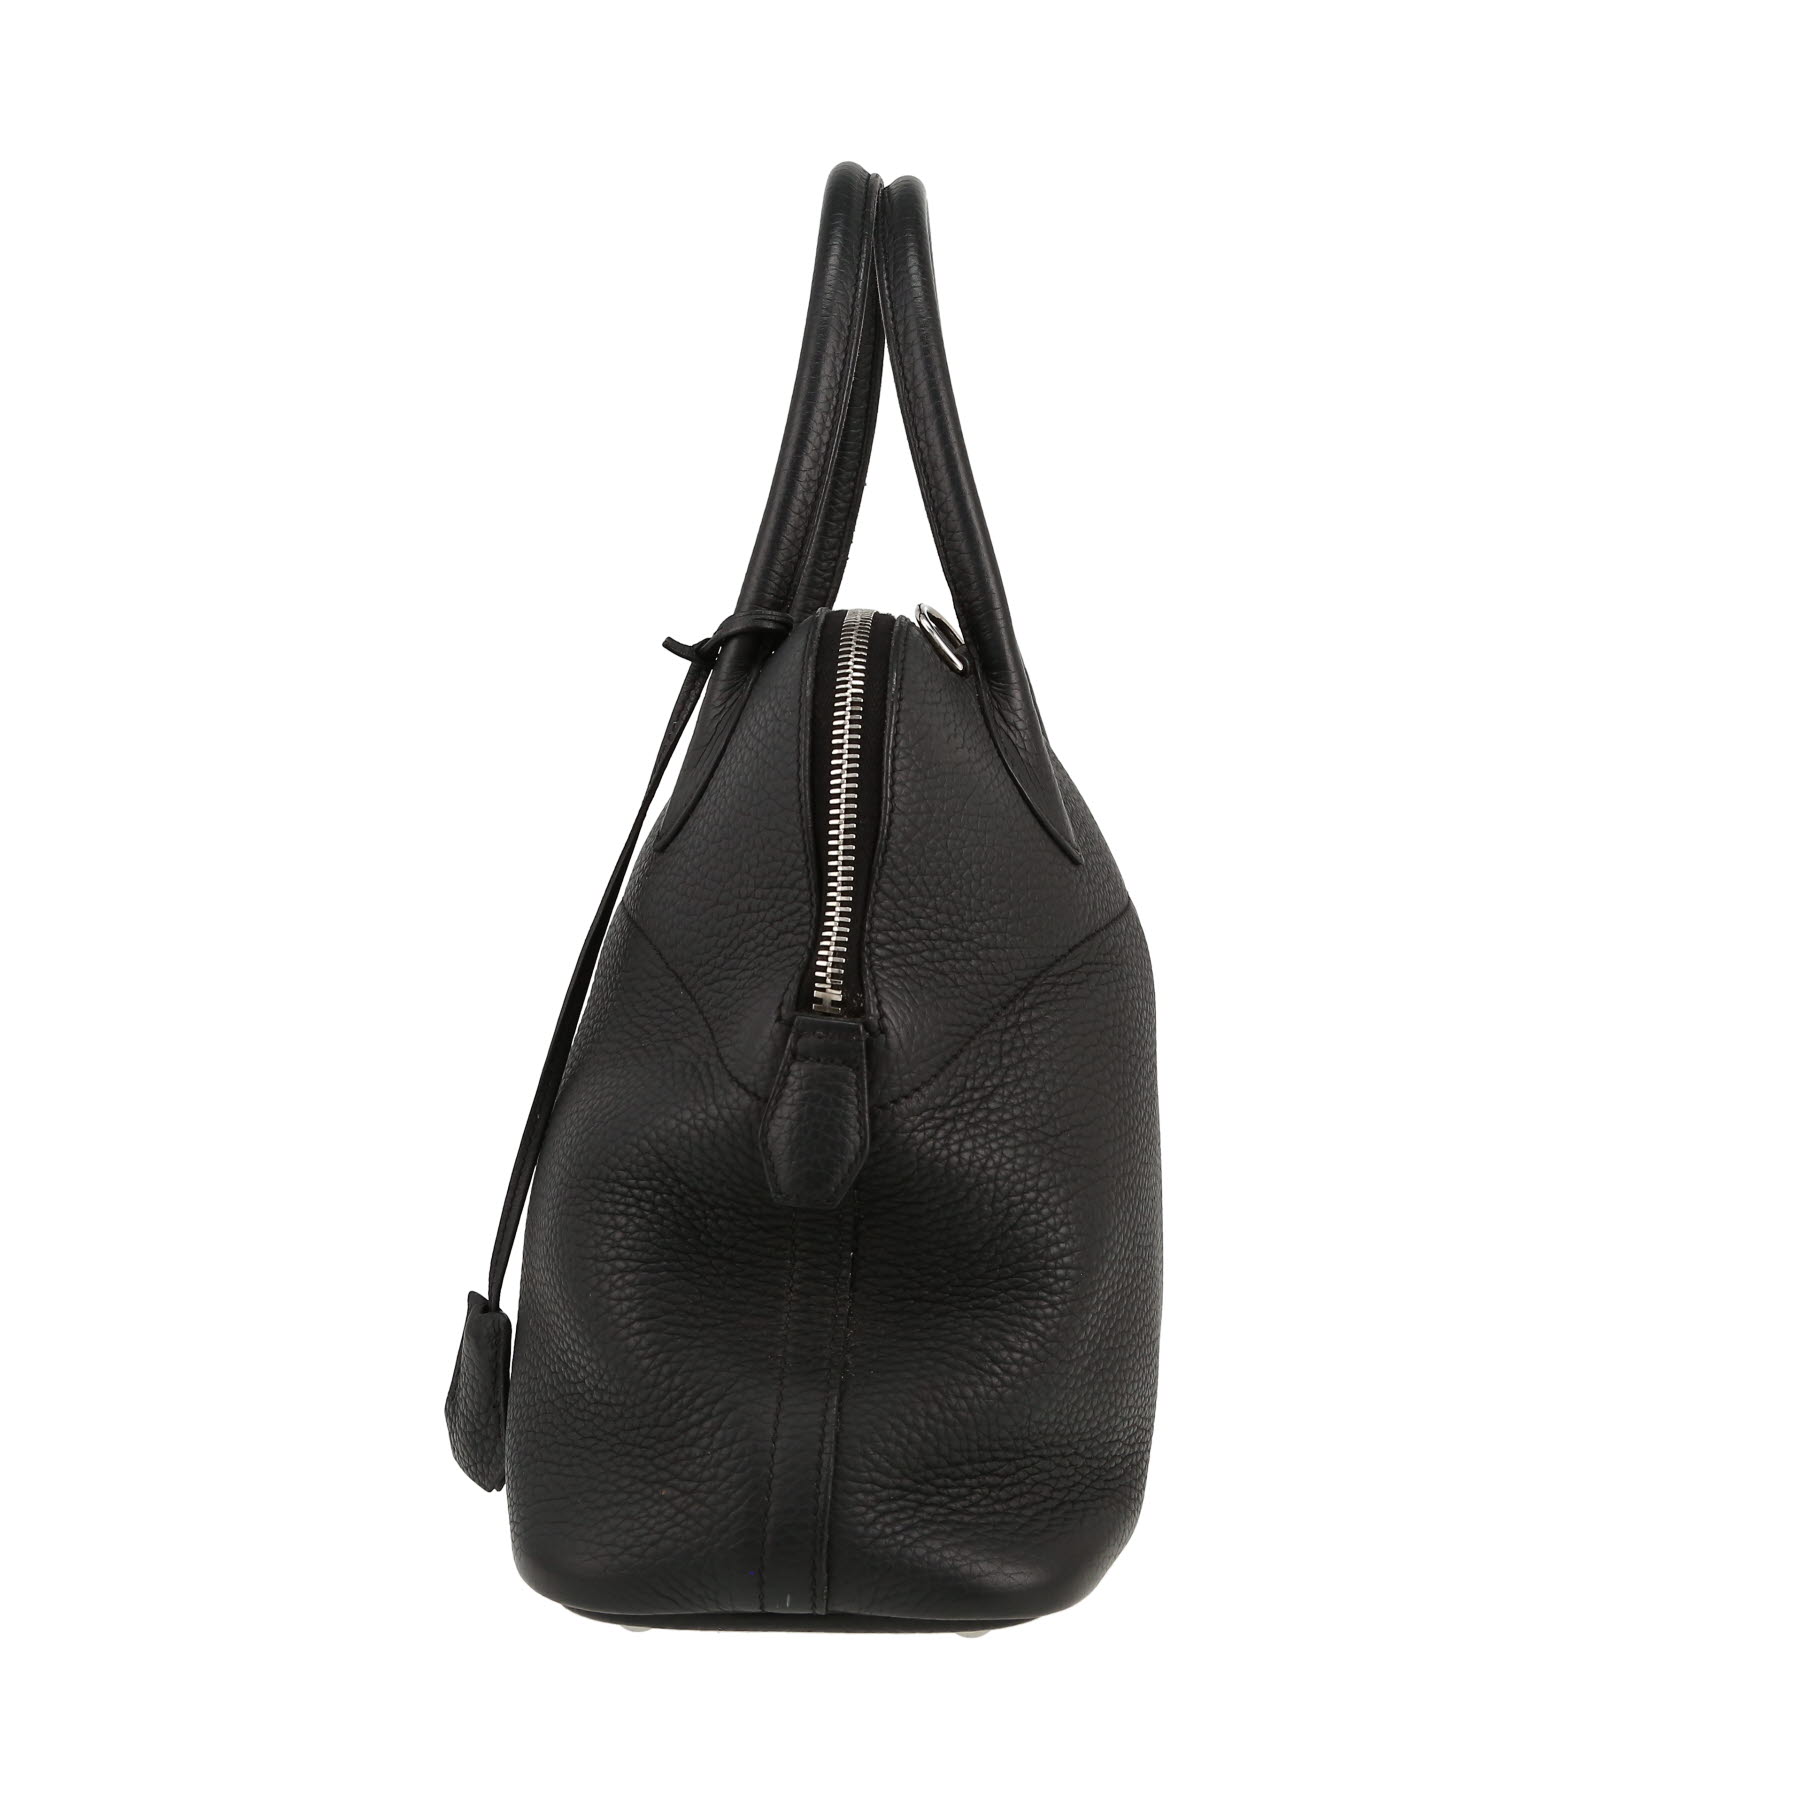 Bolide 35 cm Handbag In Black Leather Taurillon Clémence